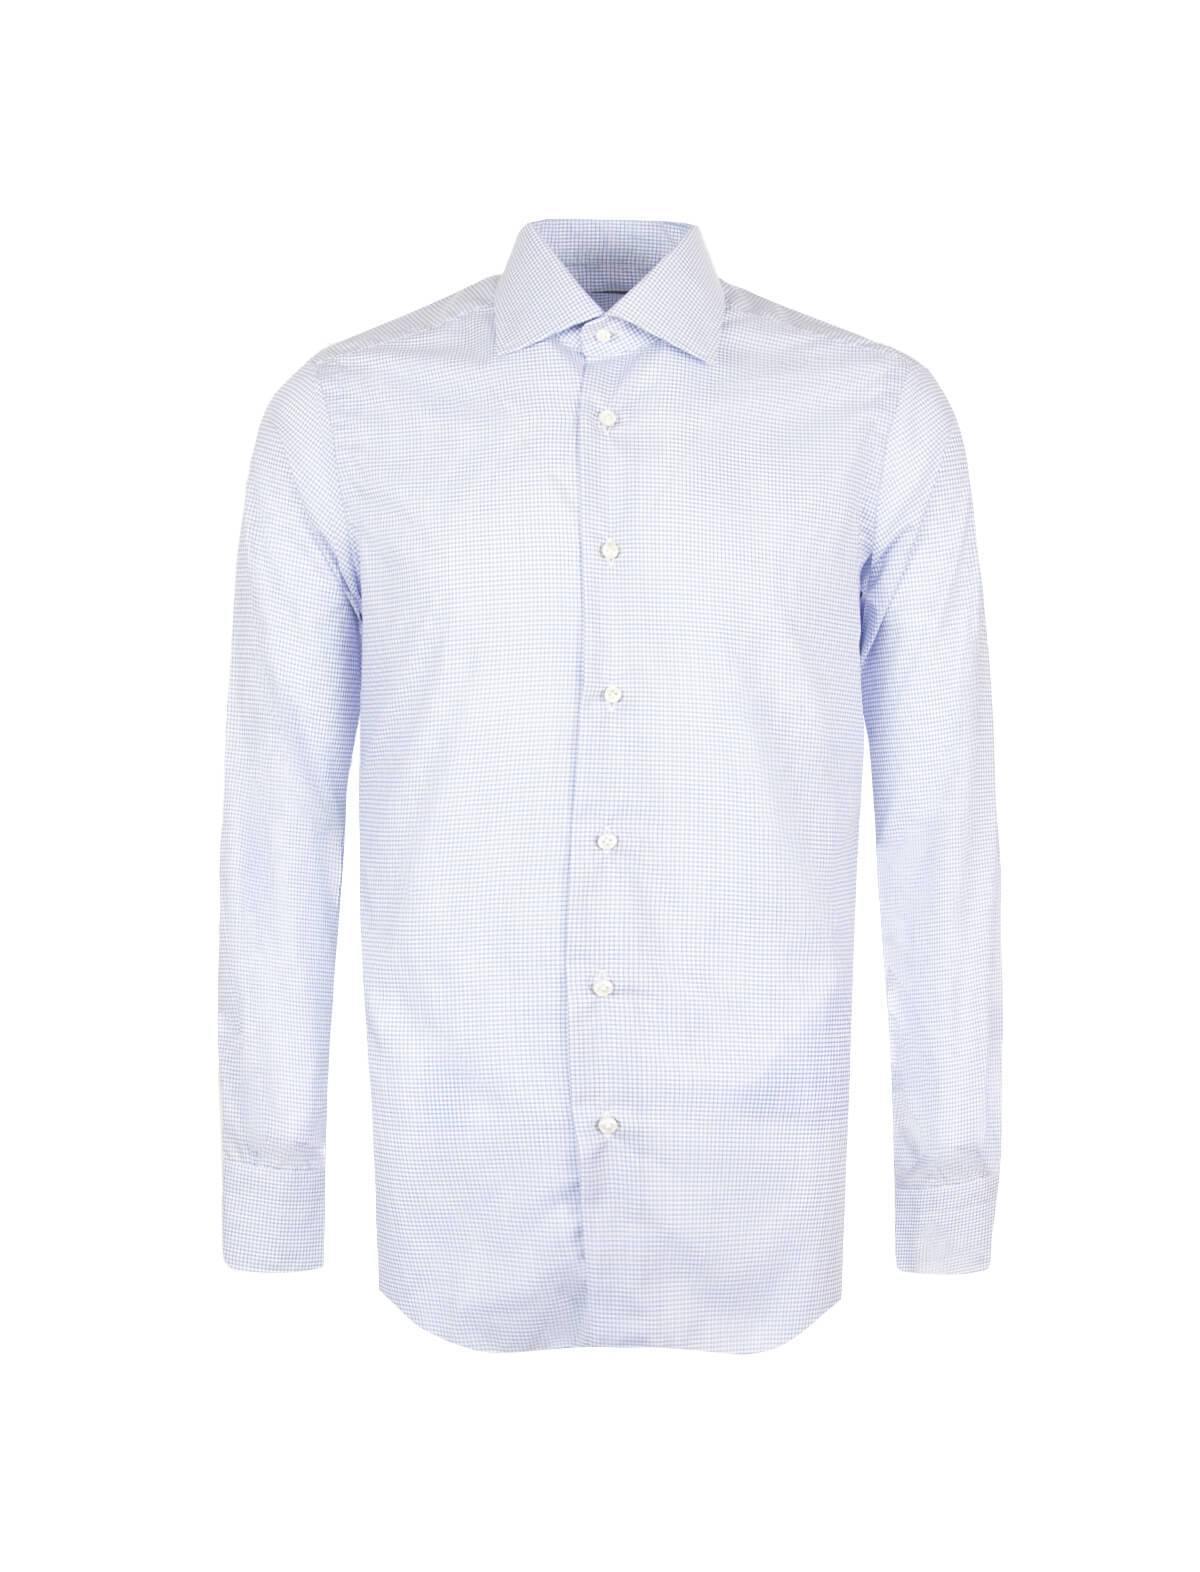 BARBA Journey Wrinkle-Resistant Shirt in White/Light Blue Checks | CLOSET Singapore